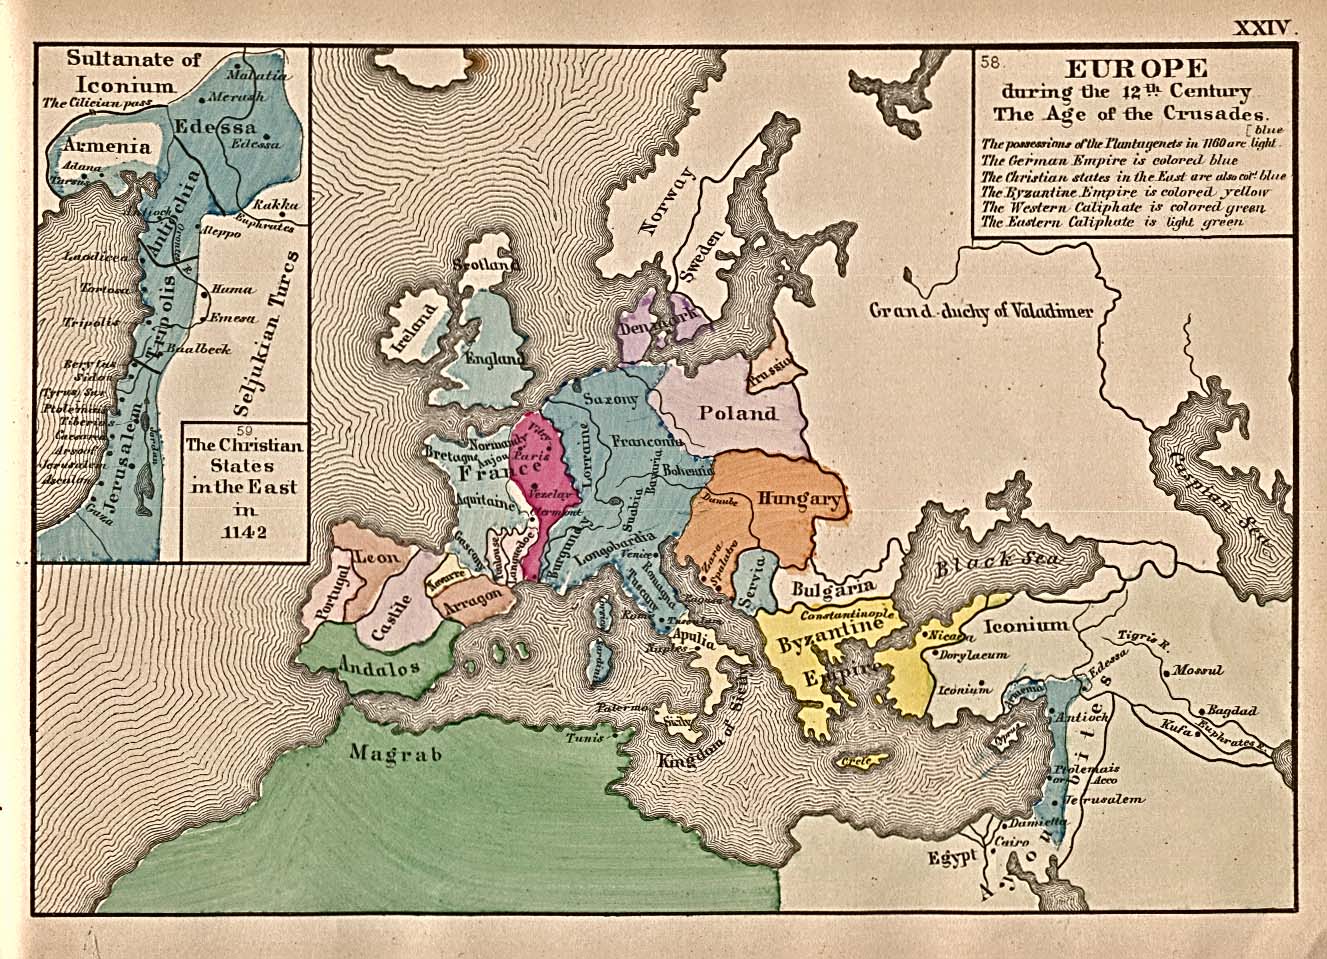 12th Century Europe (Crusades Era)